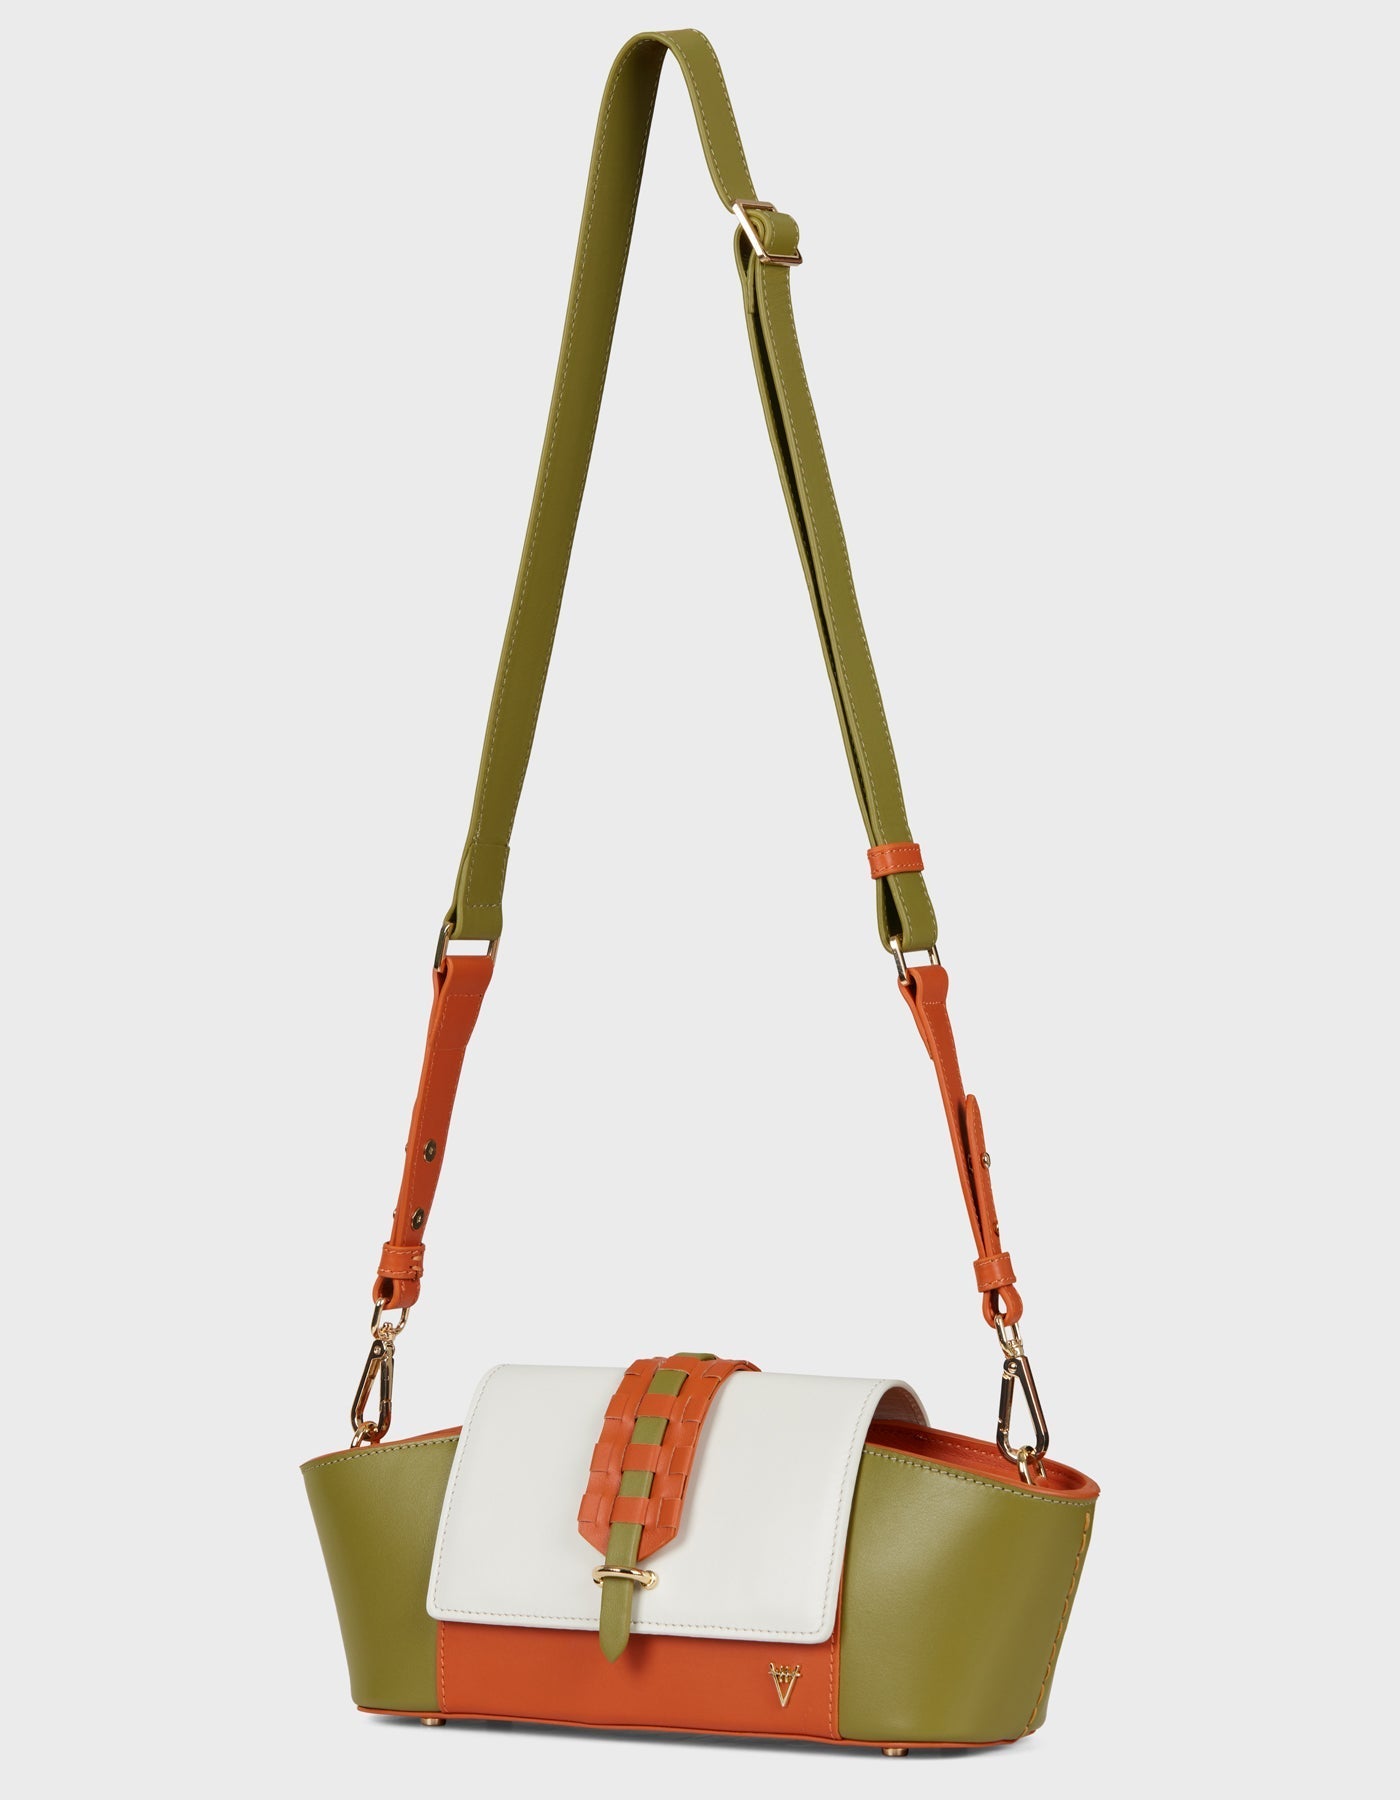 HiVa Atelier | Navis Shoulder Bag Burnt Orange & Olive & Bone | Beautiful and Versatile